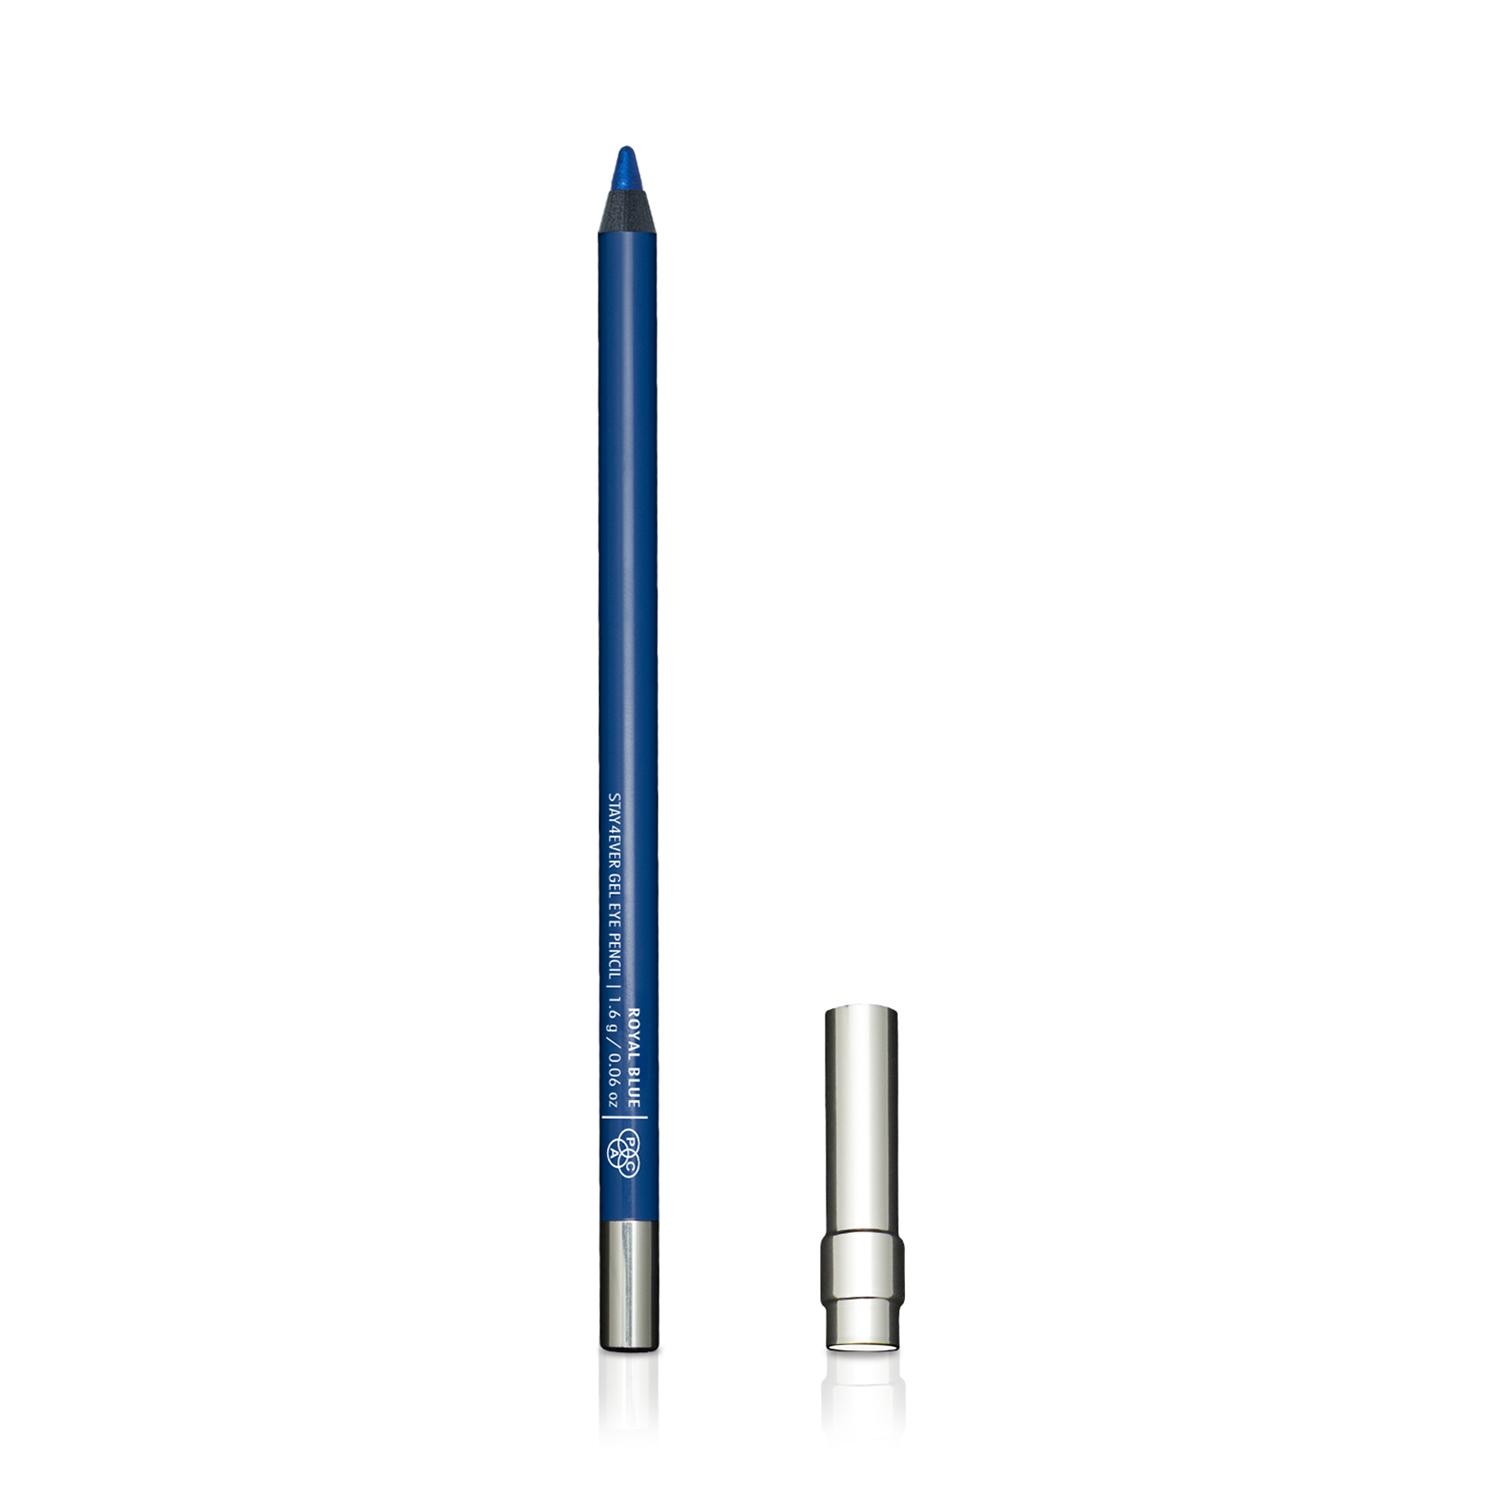 PAC | PAC Stay4Ever Gel Eye Pencil - Royal Blue (1.6g)